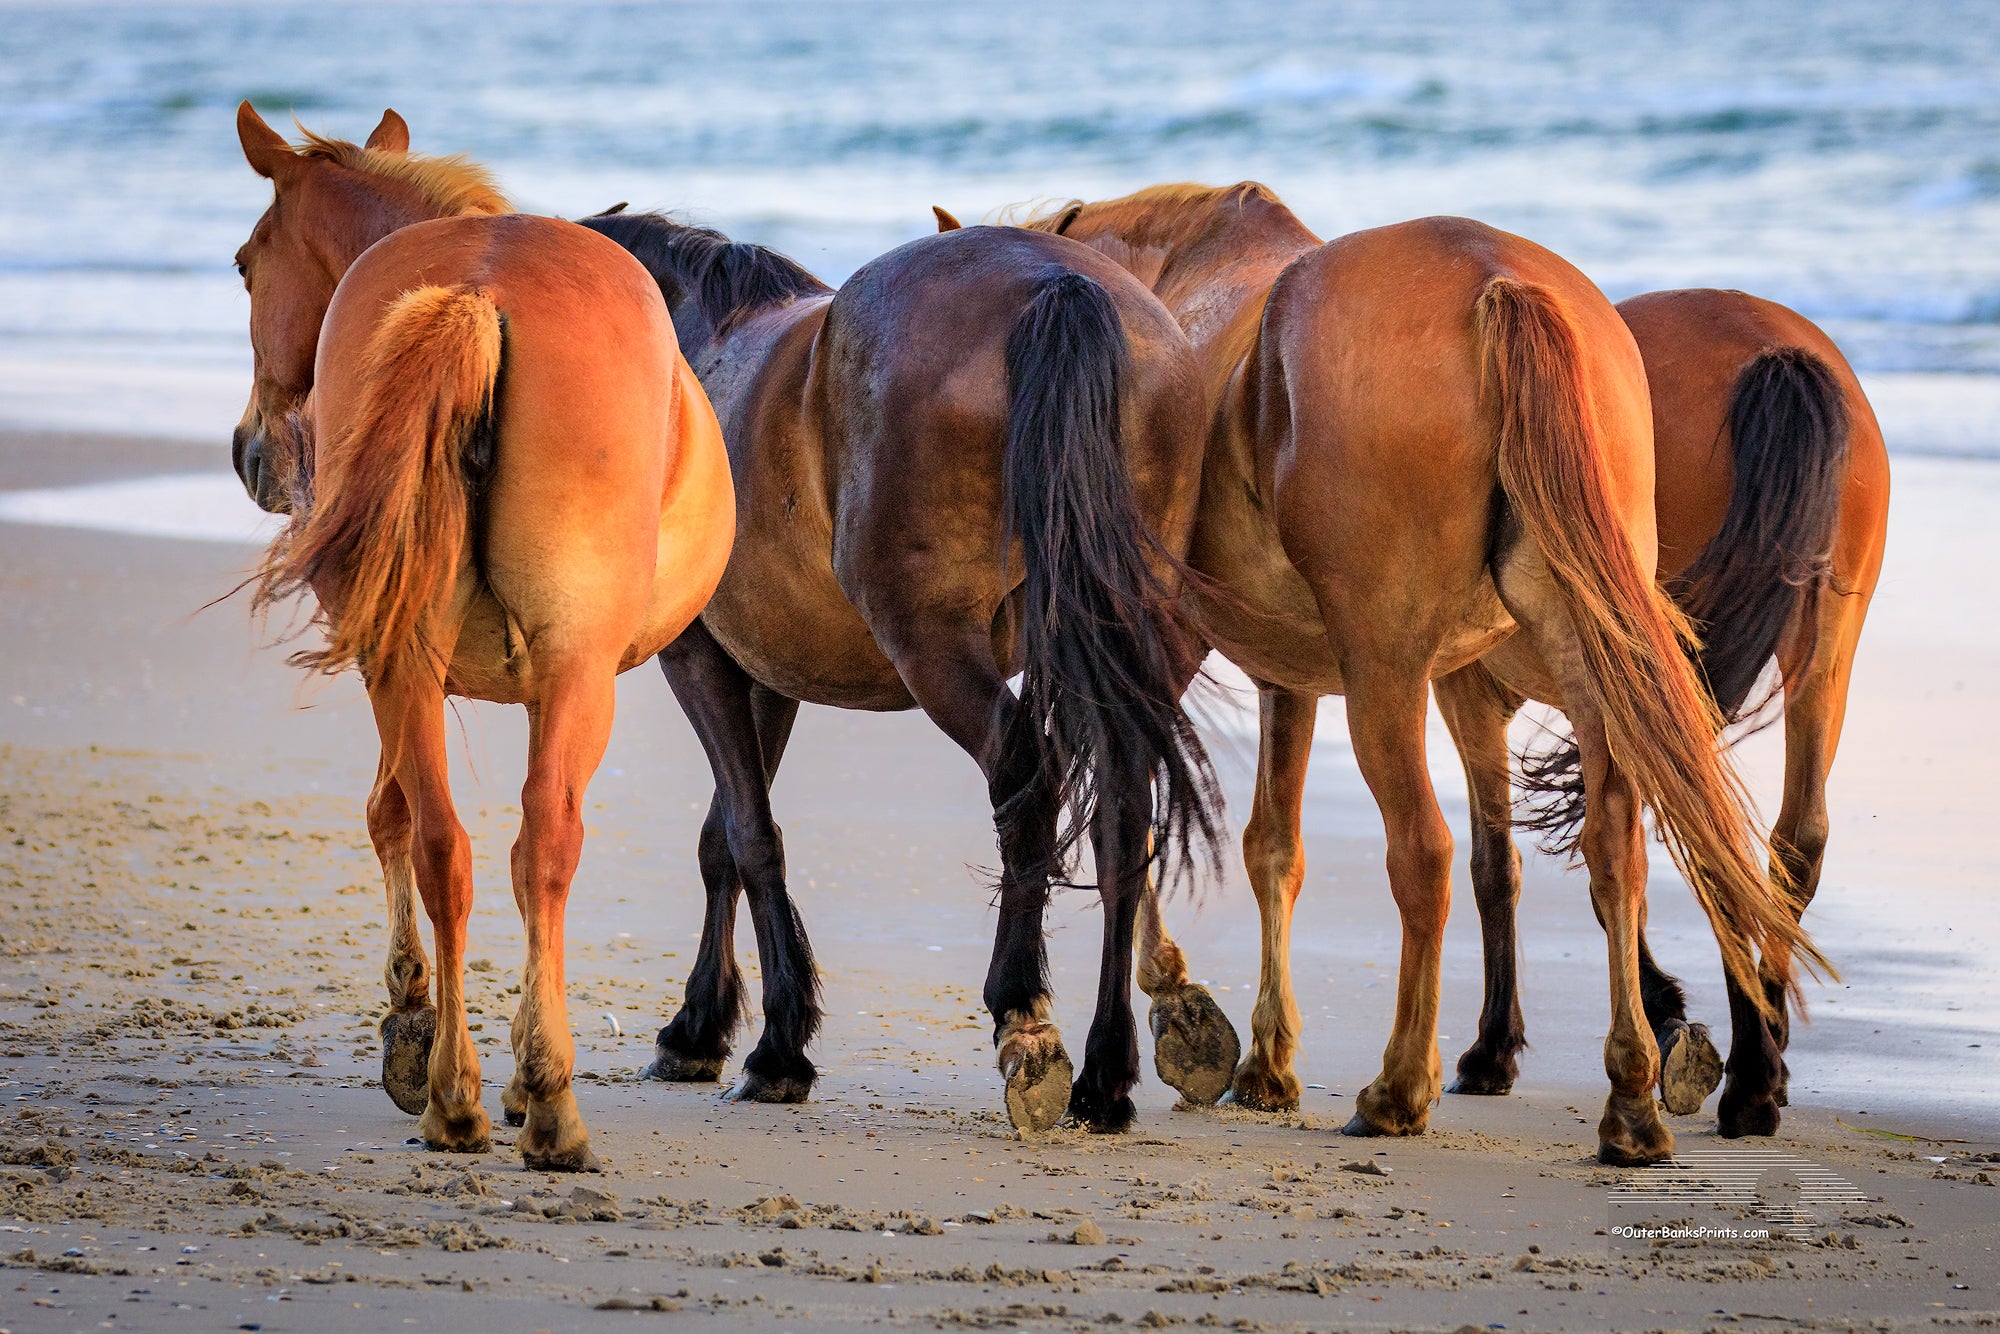 Four wild horses on the beach at Carova Beach, NC on the Outer Banks.